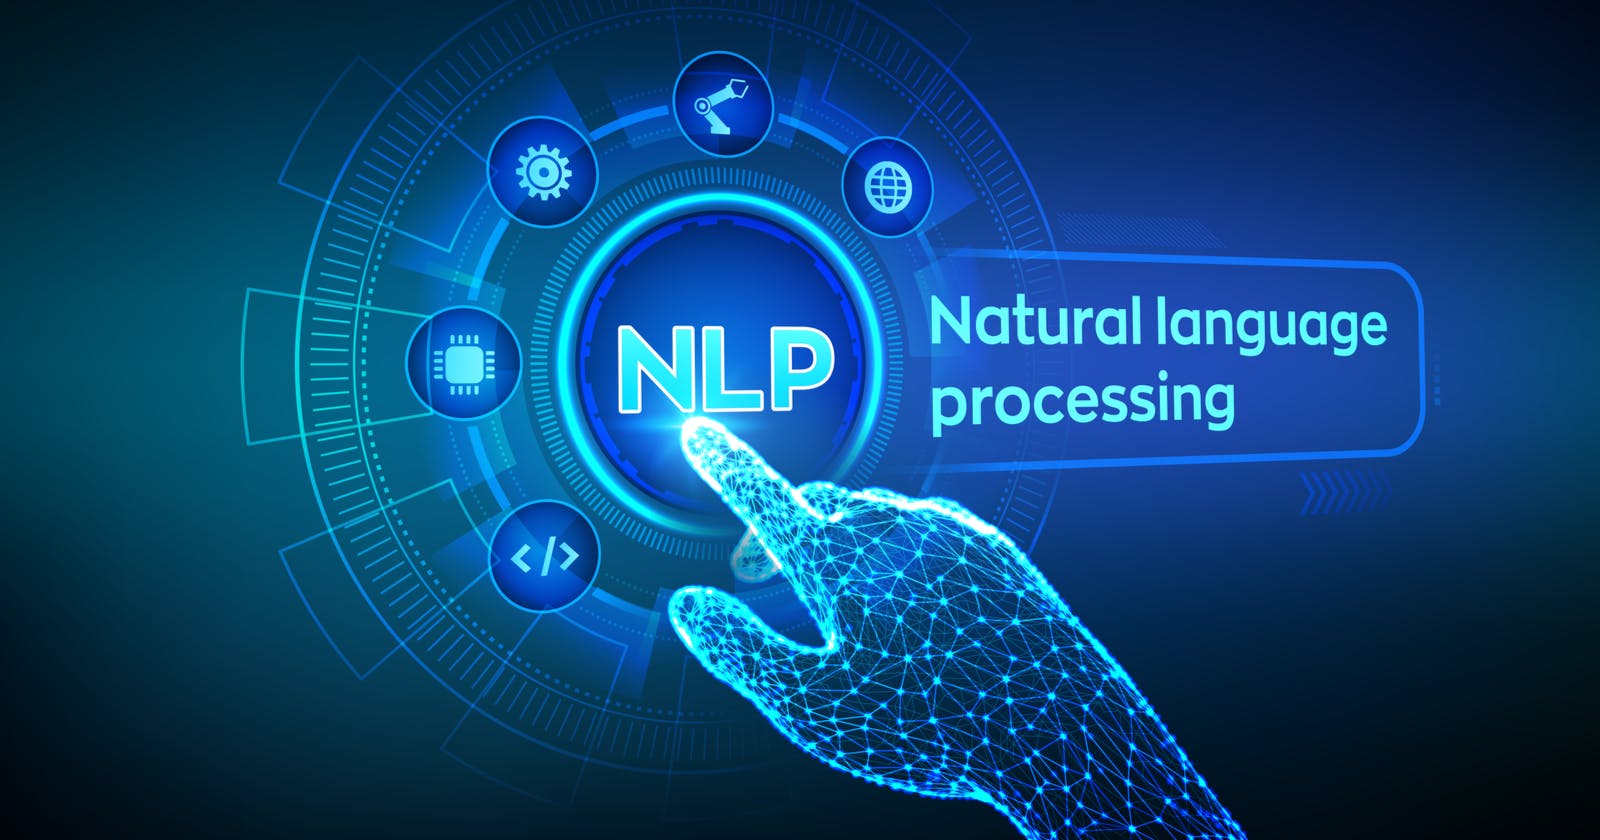 NLP- Natural Language Processing